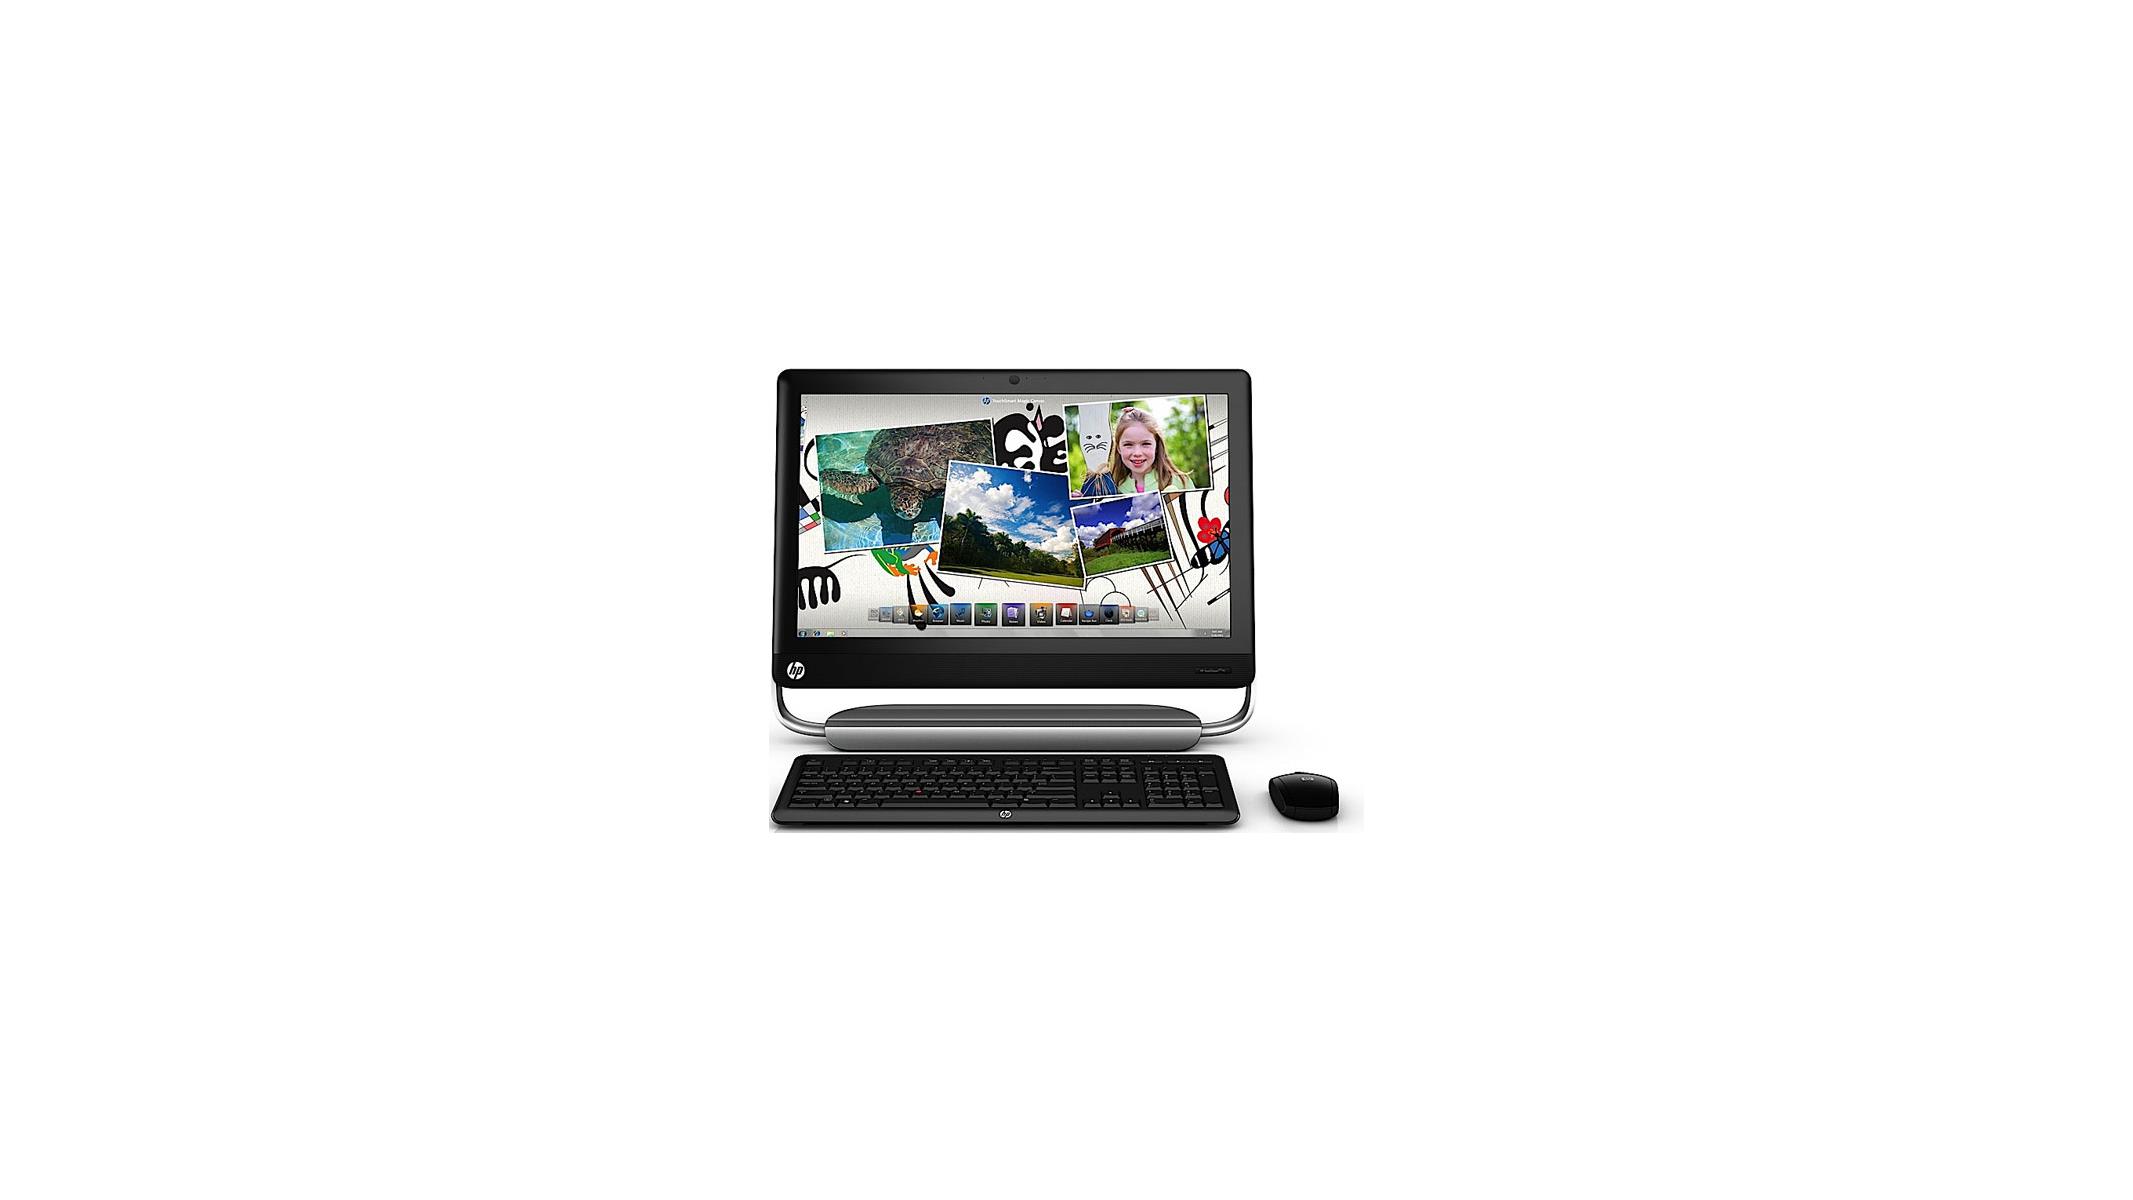 TouchSmart 420-1000 Desktop PC series